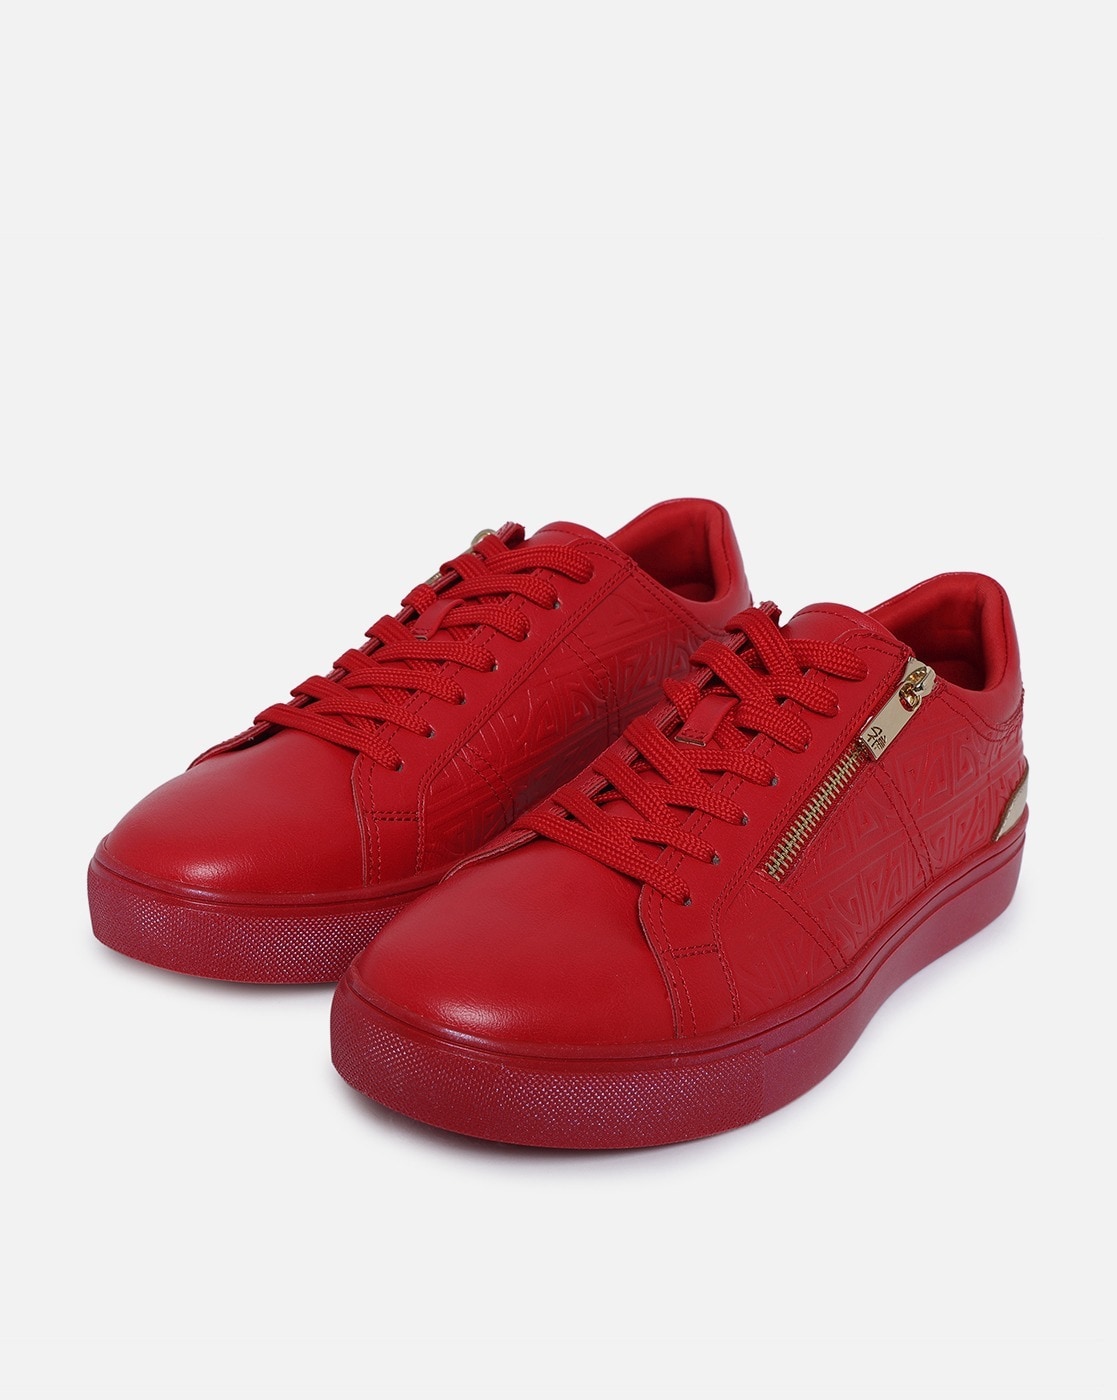 Saint Laurent [SL/01H] Men's Triple Red Leather Hi Top Sneaker Size 10  US/43 EU - Helia Beer Co